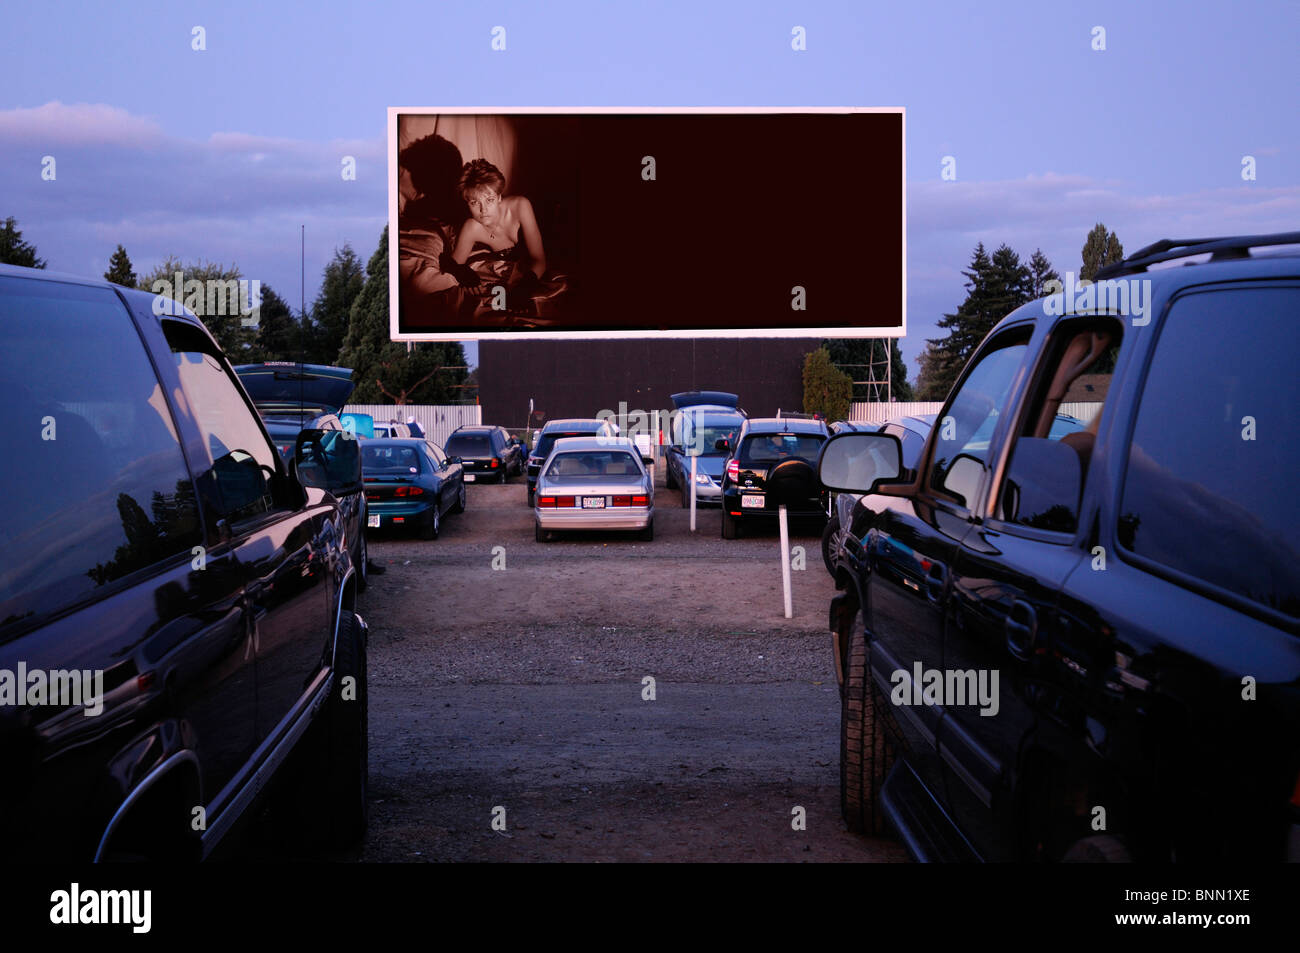 Motor Vu Drive In Dallas Oregon USA cinema parking cars Stock Photo